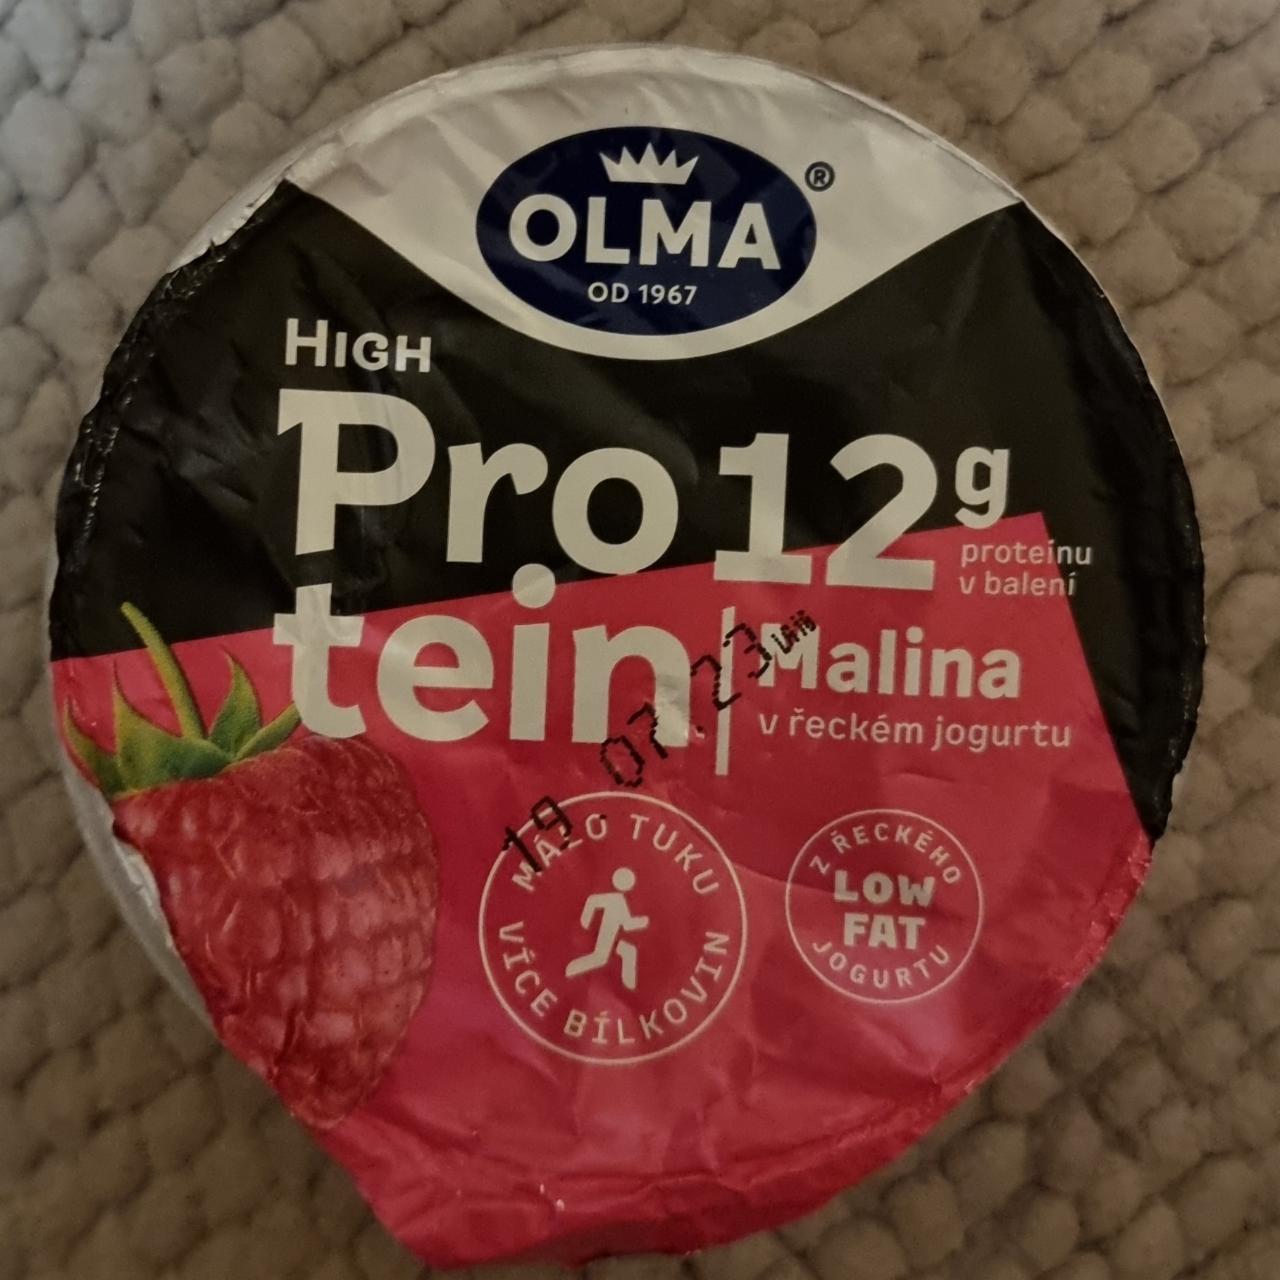 Fotografie - High Protein Malina v řeckém jogurtu Olma